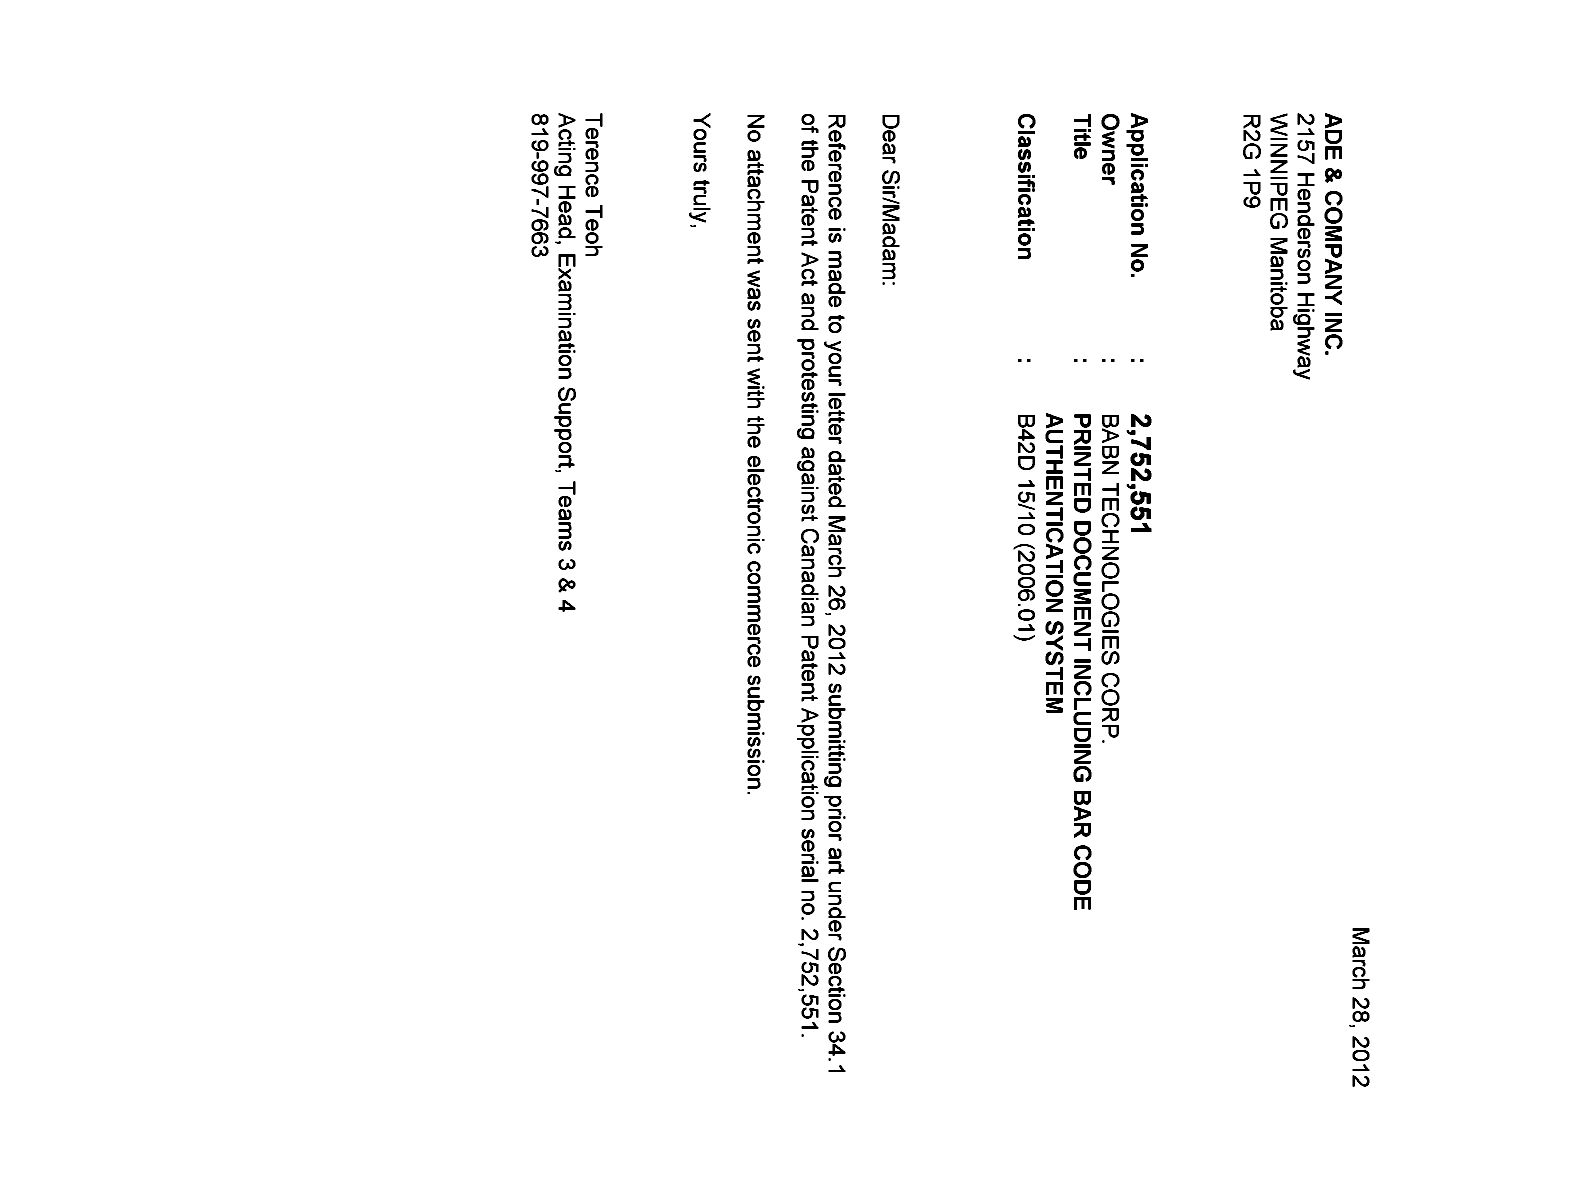 Canadian Patent Document 2752551. Prosecution-Amendment 20111228. Image 2 of 2